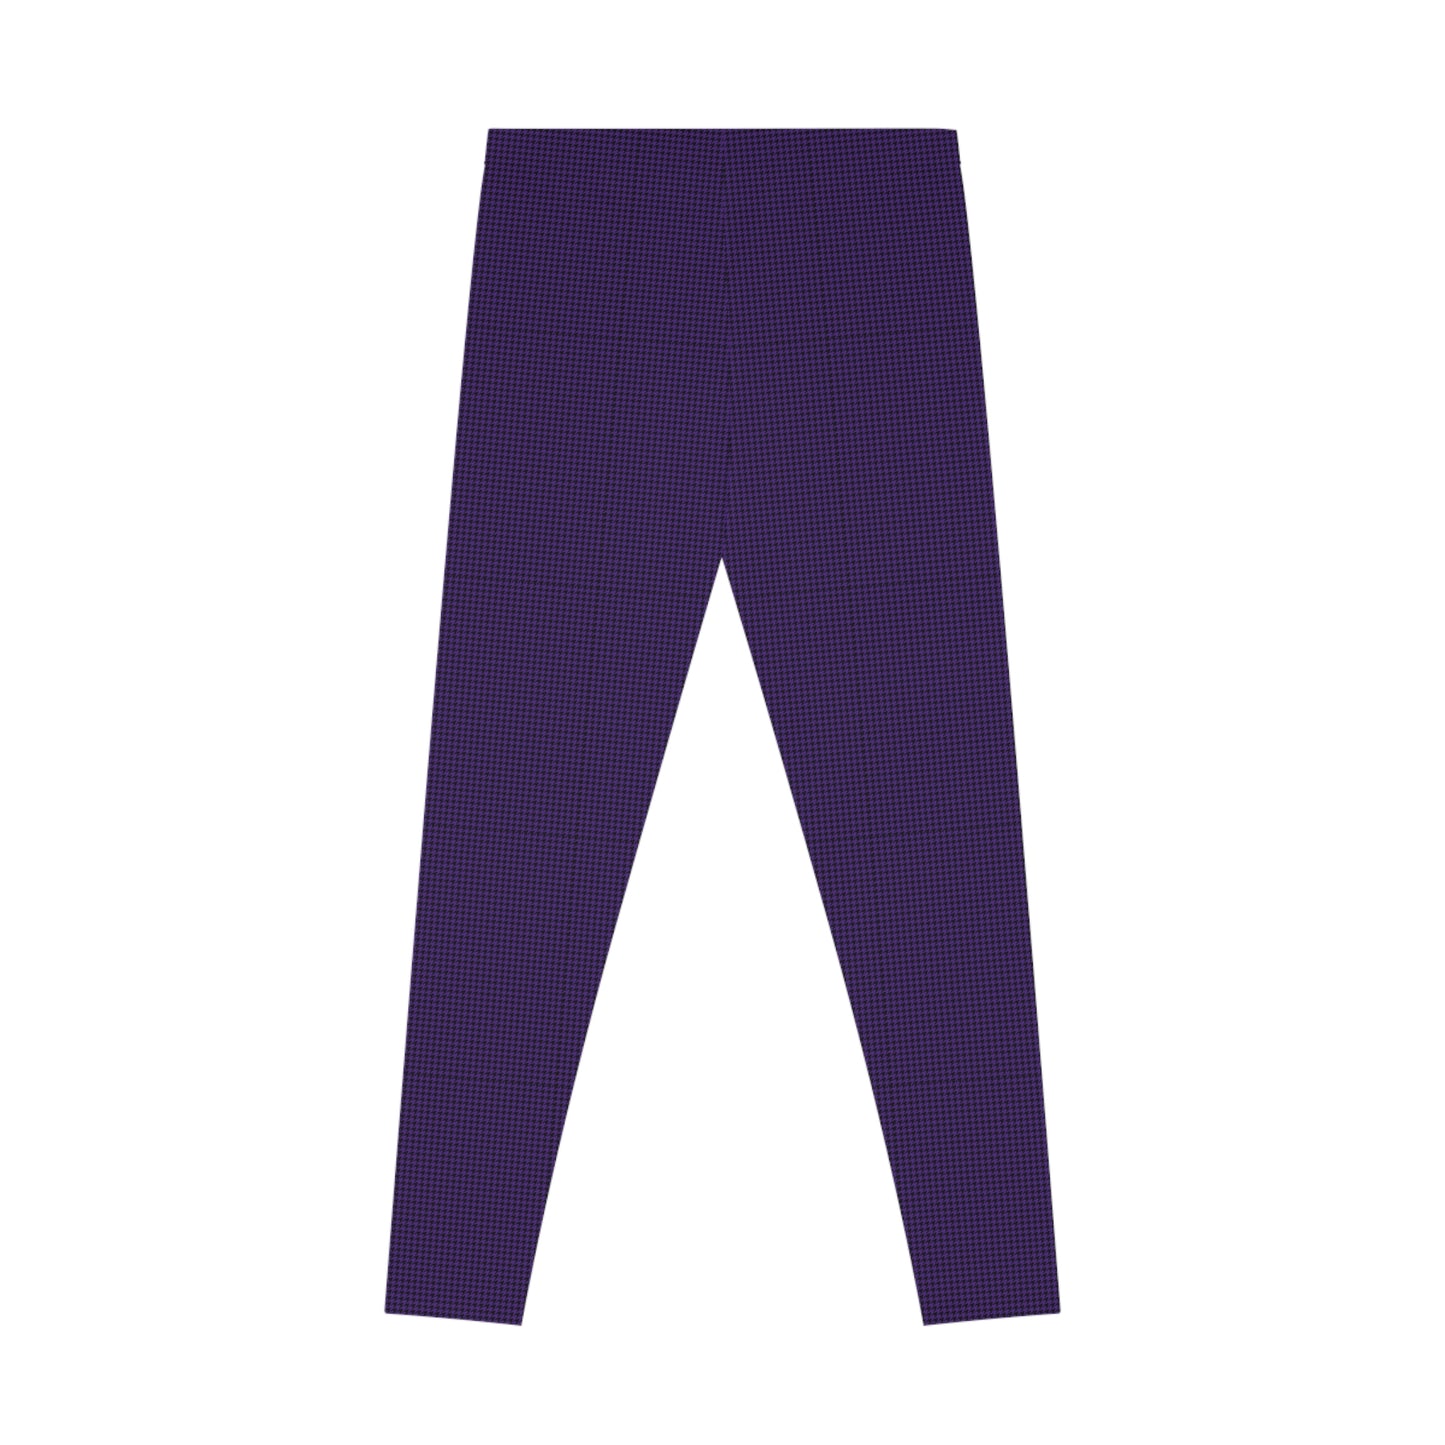 University Magickus Mid-rise Stretch Leggings in Purple/Black